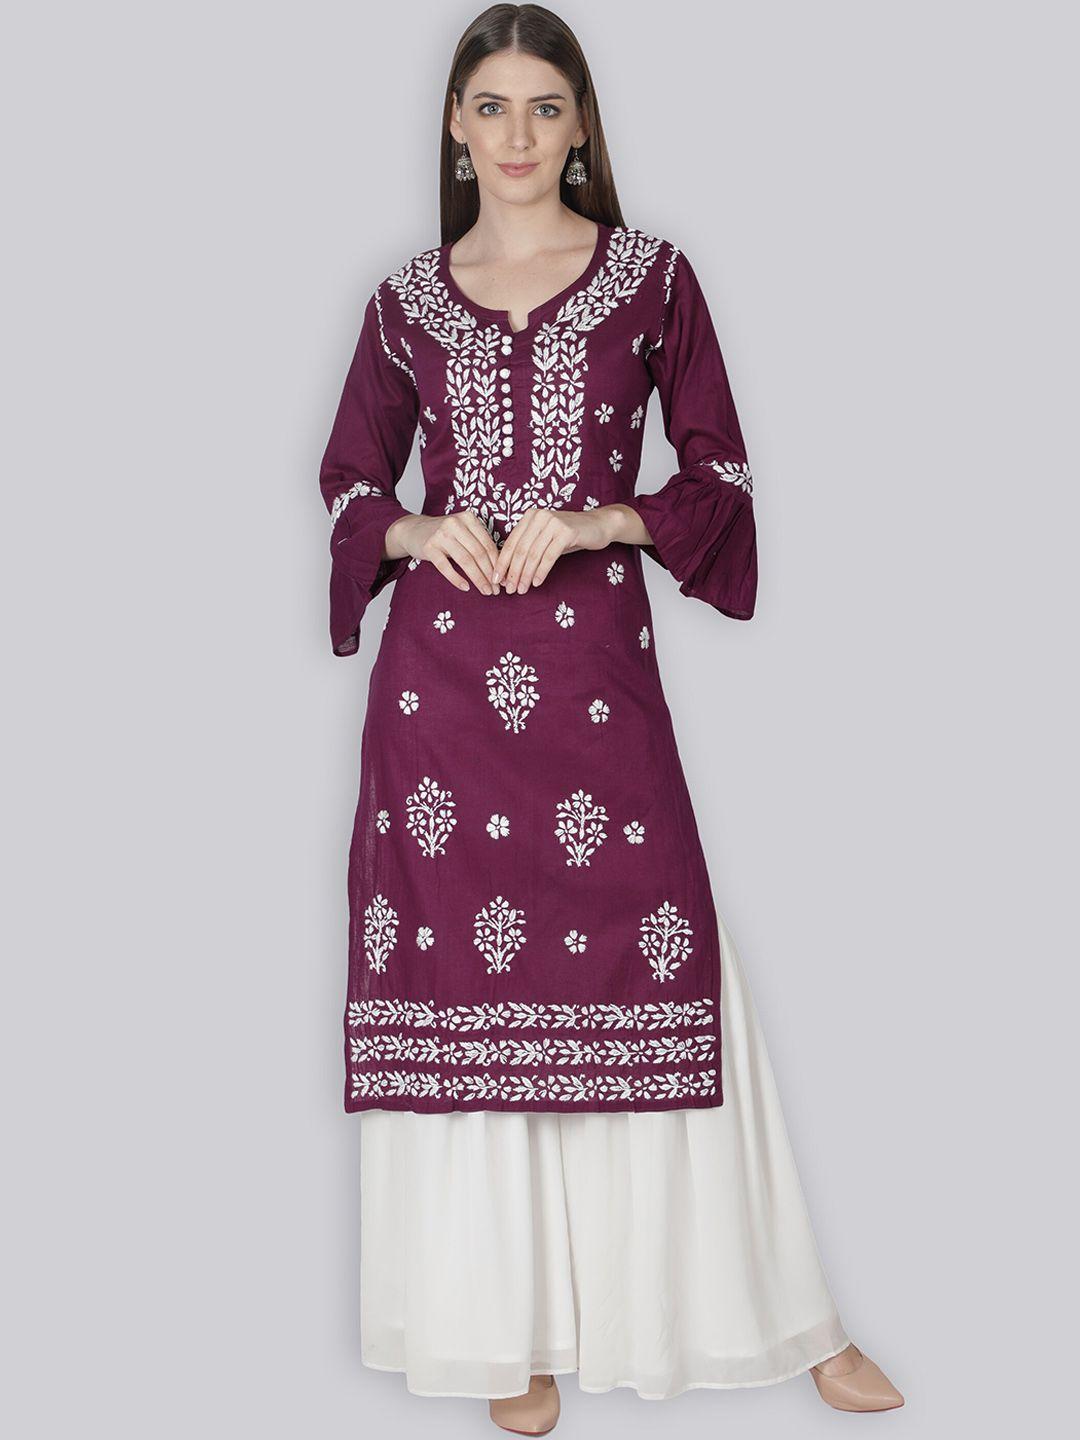 seva-chikan-women-ethnic-motifs-embroidered-flared-sleeves-thread-work-handloom-kurta